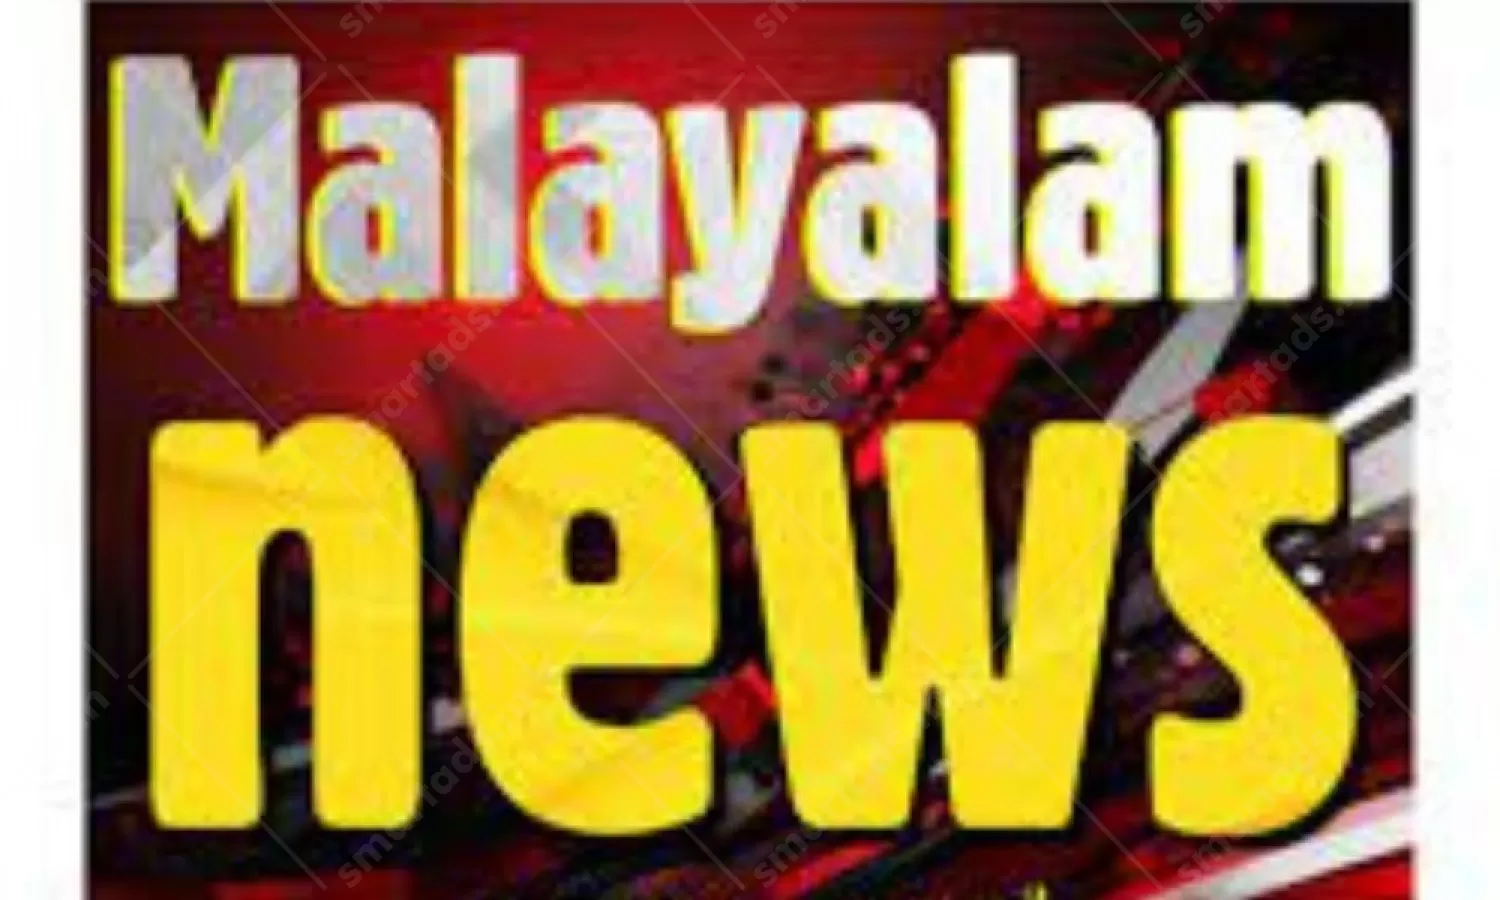 Digital Media Malayalam News Advertising in India